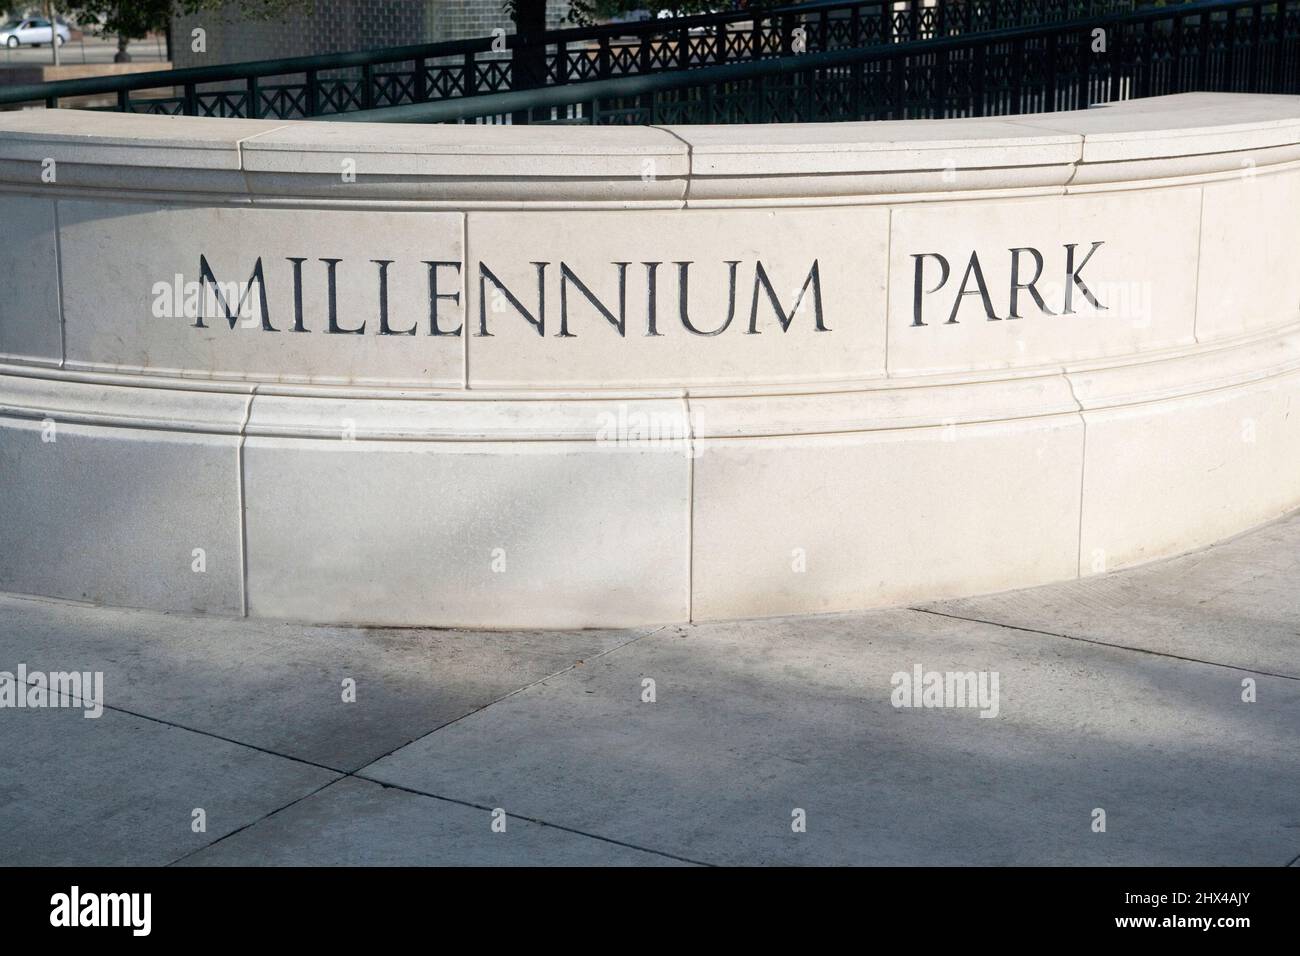 MILLENNIUM PARK SIGN CHICAGO ILLINOIS USA Stock Photo